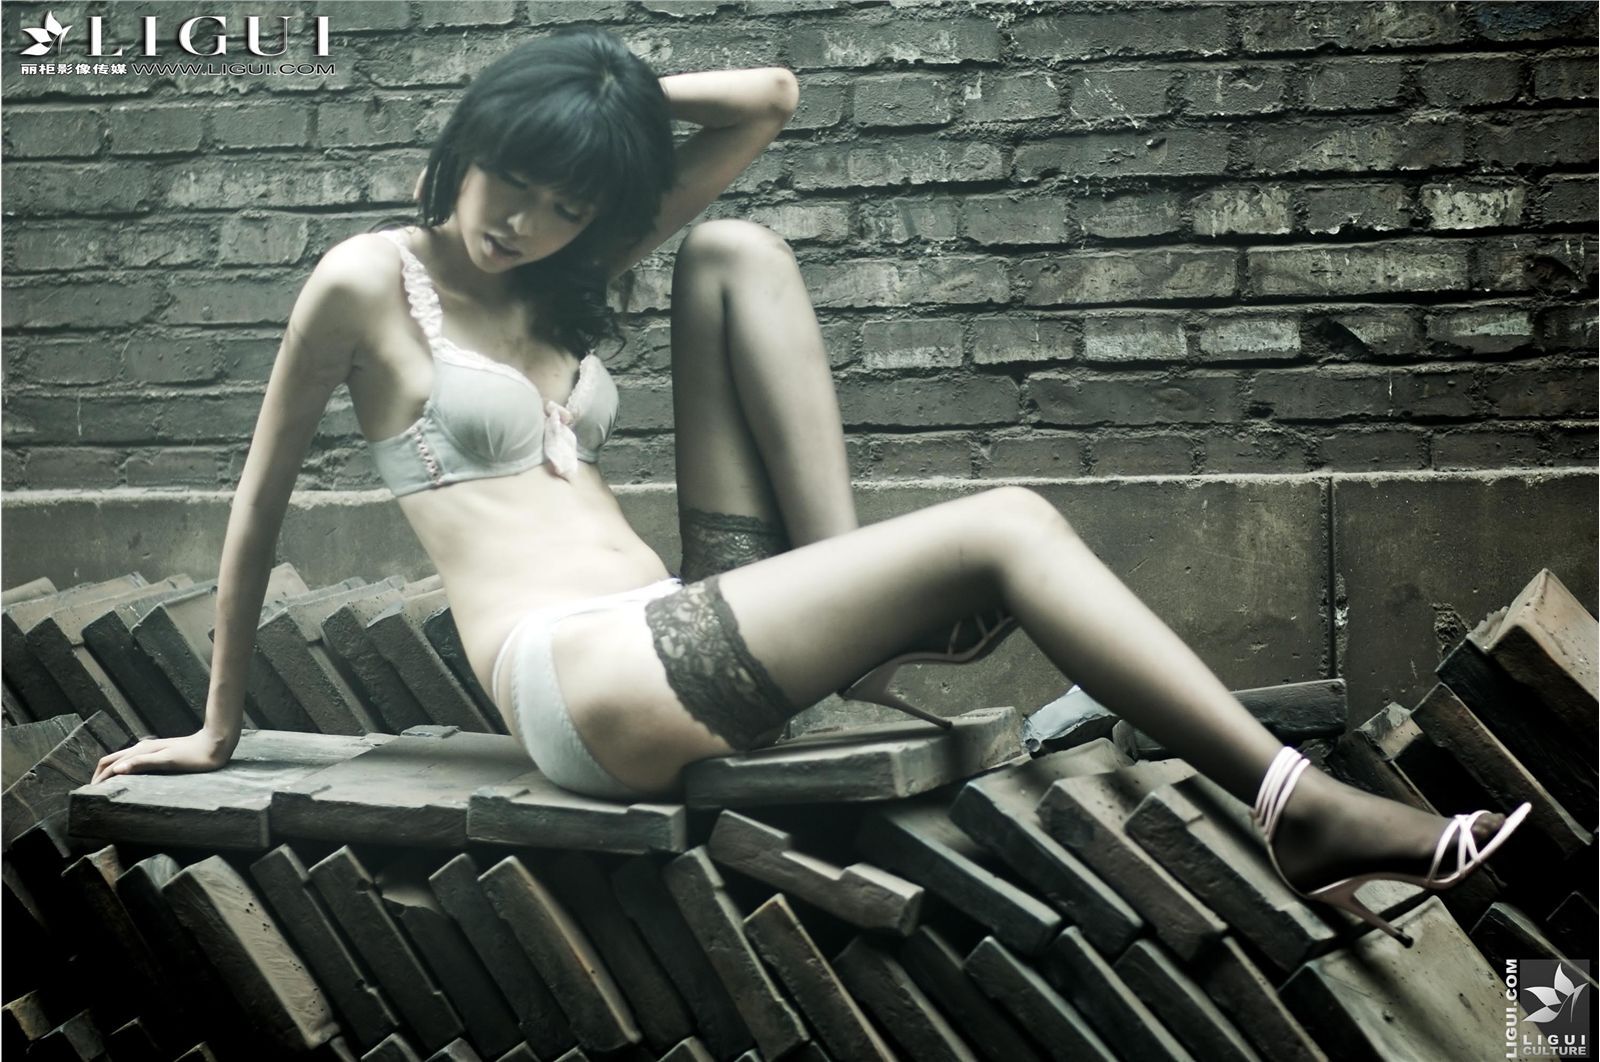 [Li cabinet] 2013.03.25 alternative visual model Monroe stockings beauty picture